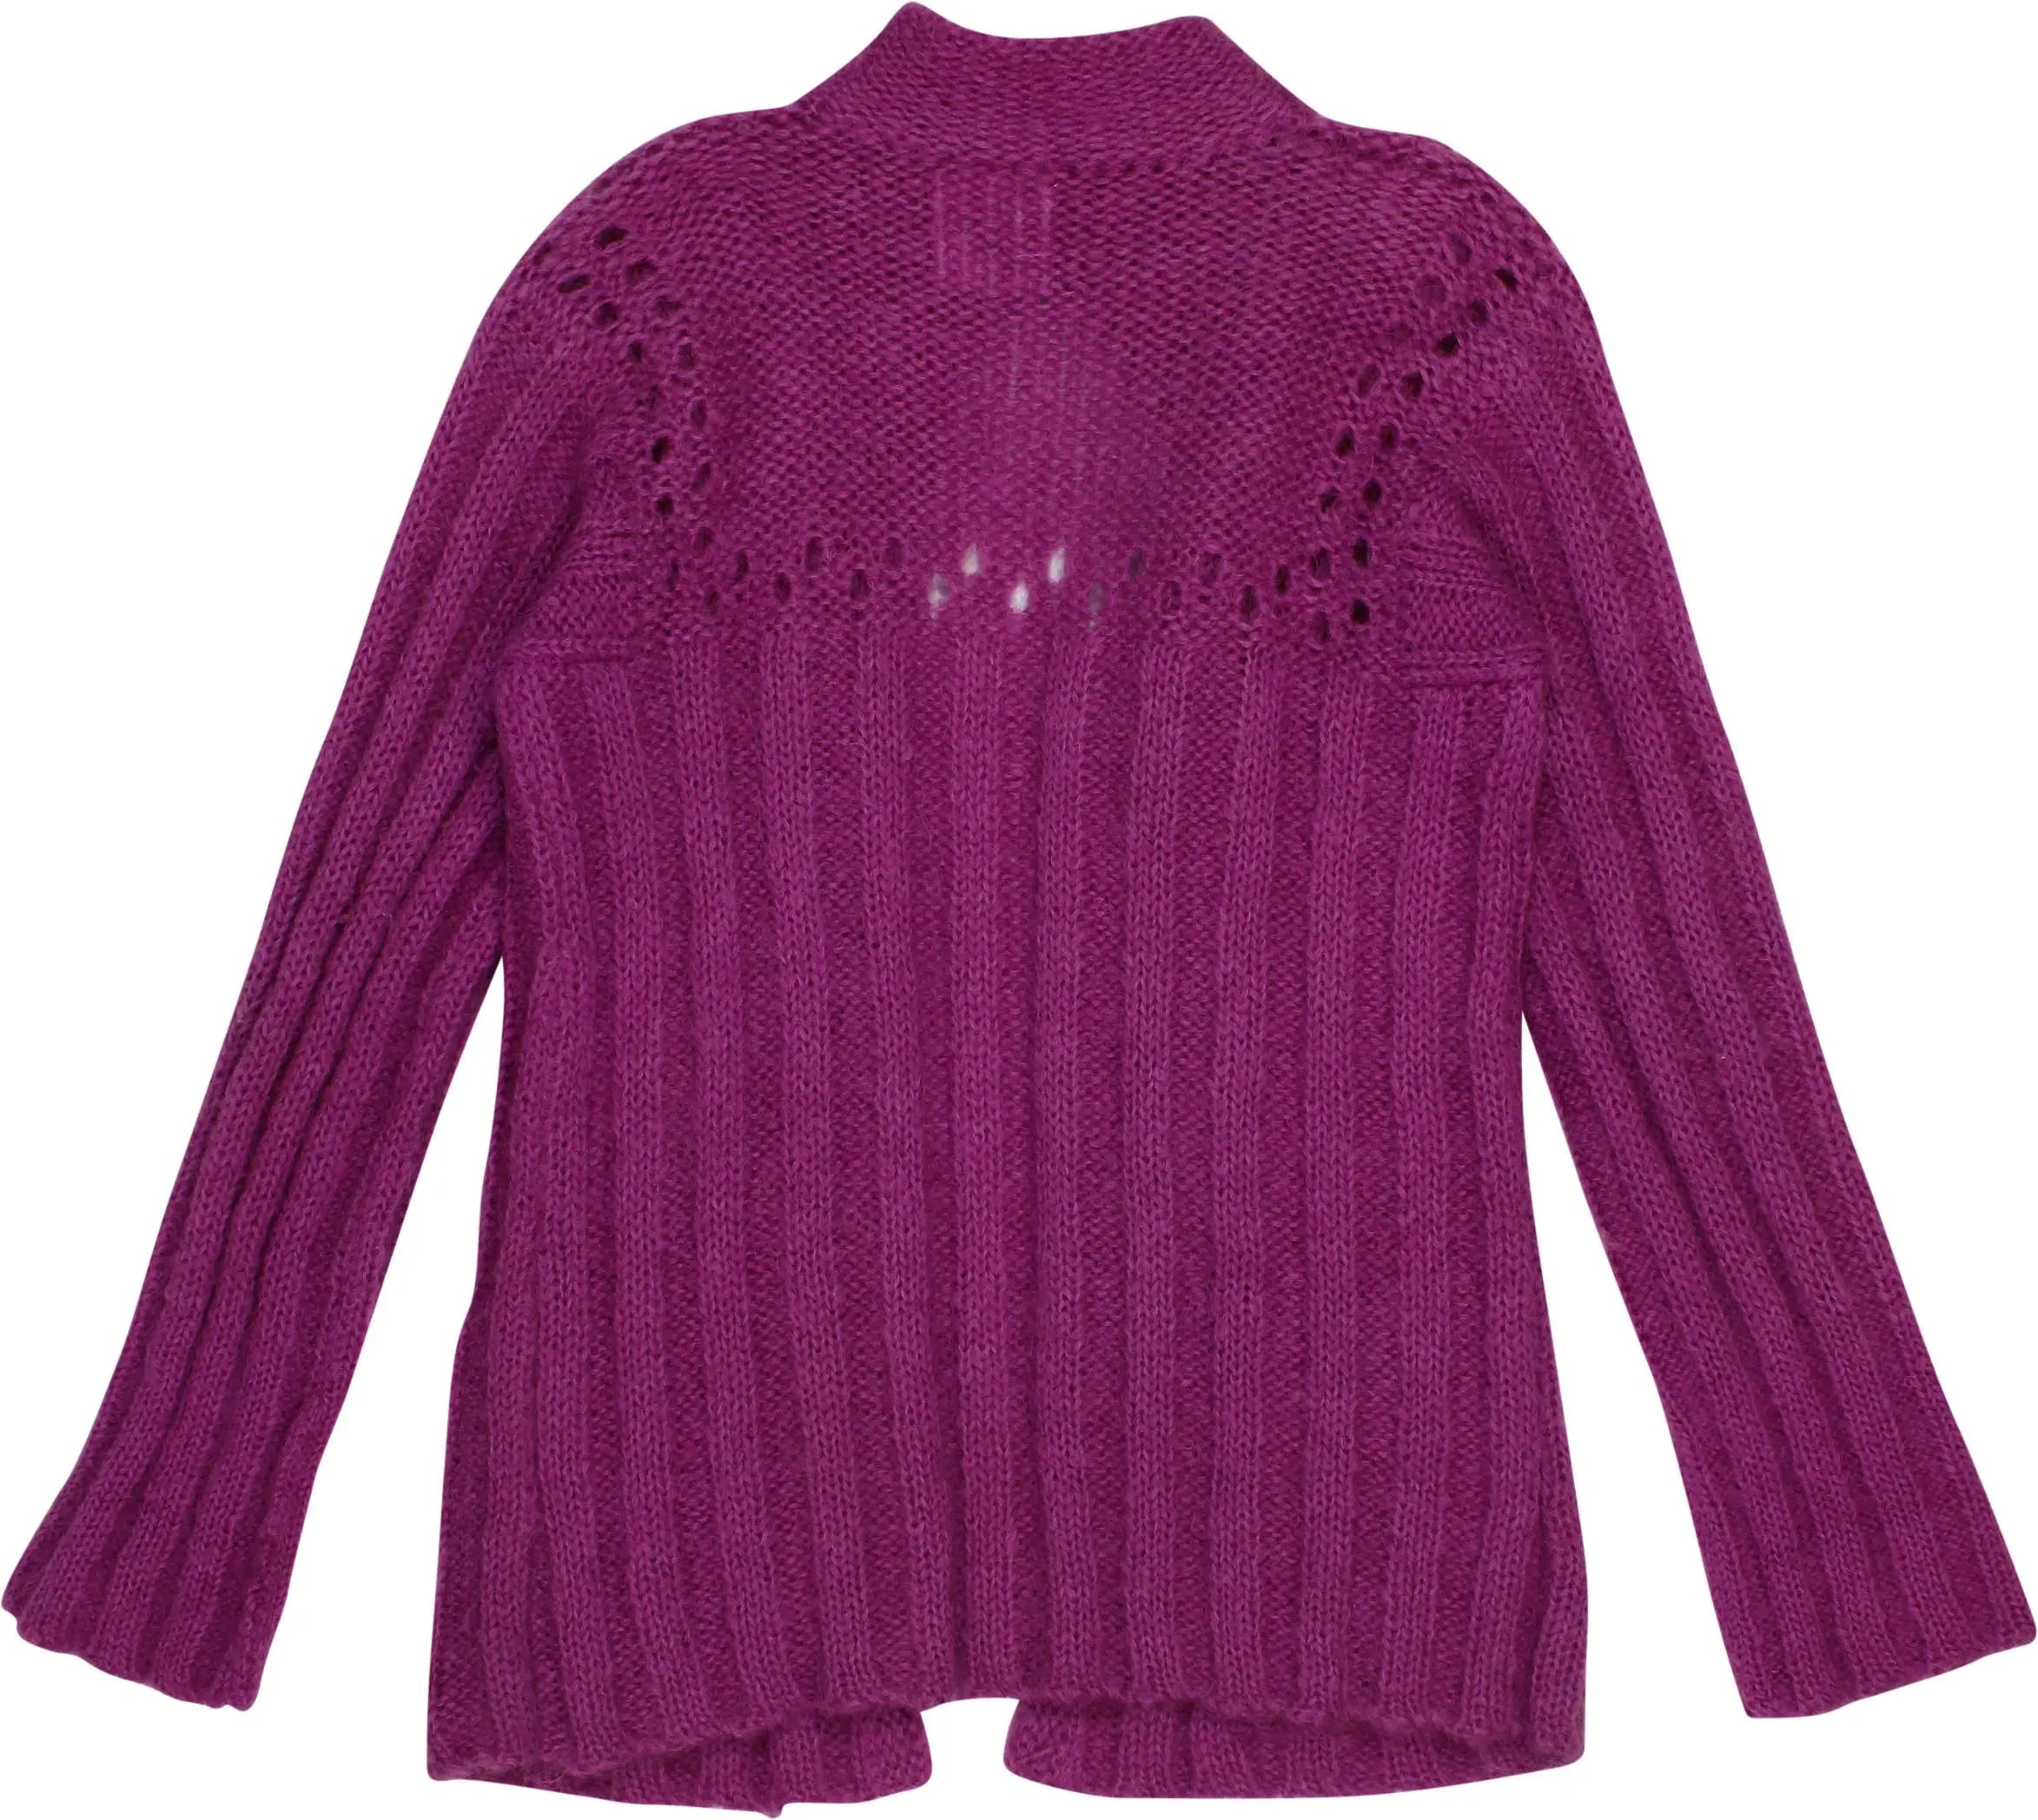 Handmade - Purple Handmade Cardigan- ThriftTale.com - Vintage and second handclothing